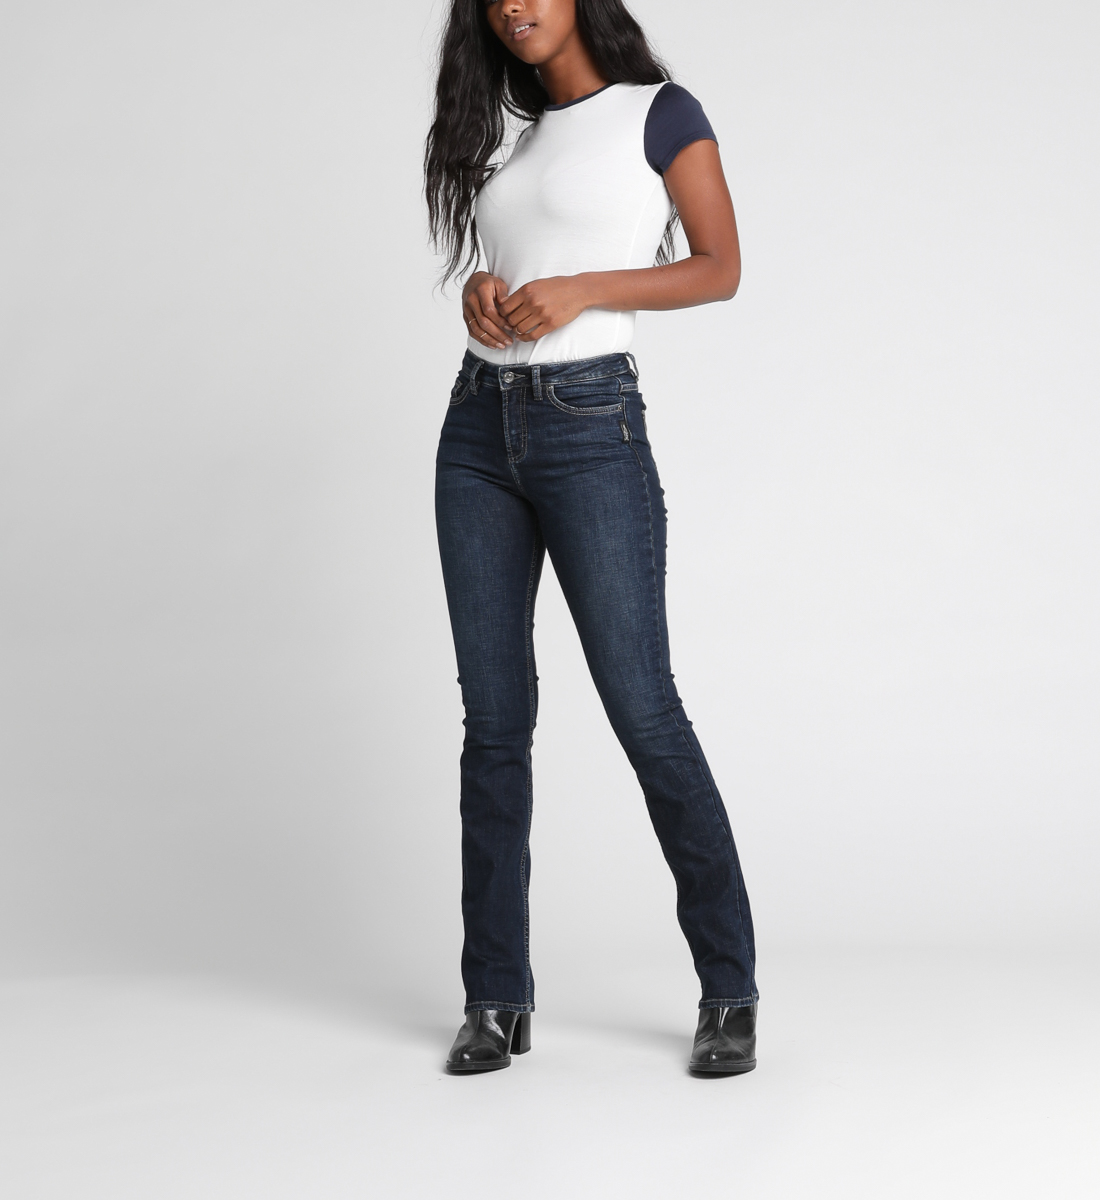 womens high rise bootcut jeans